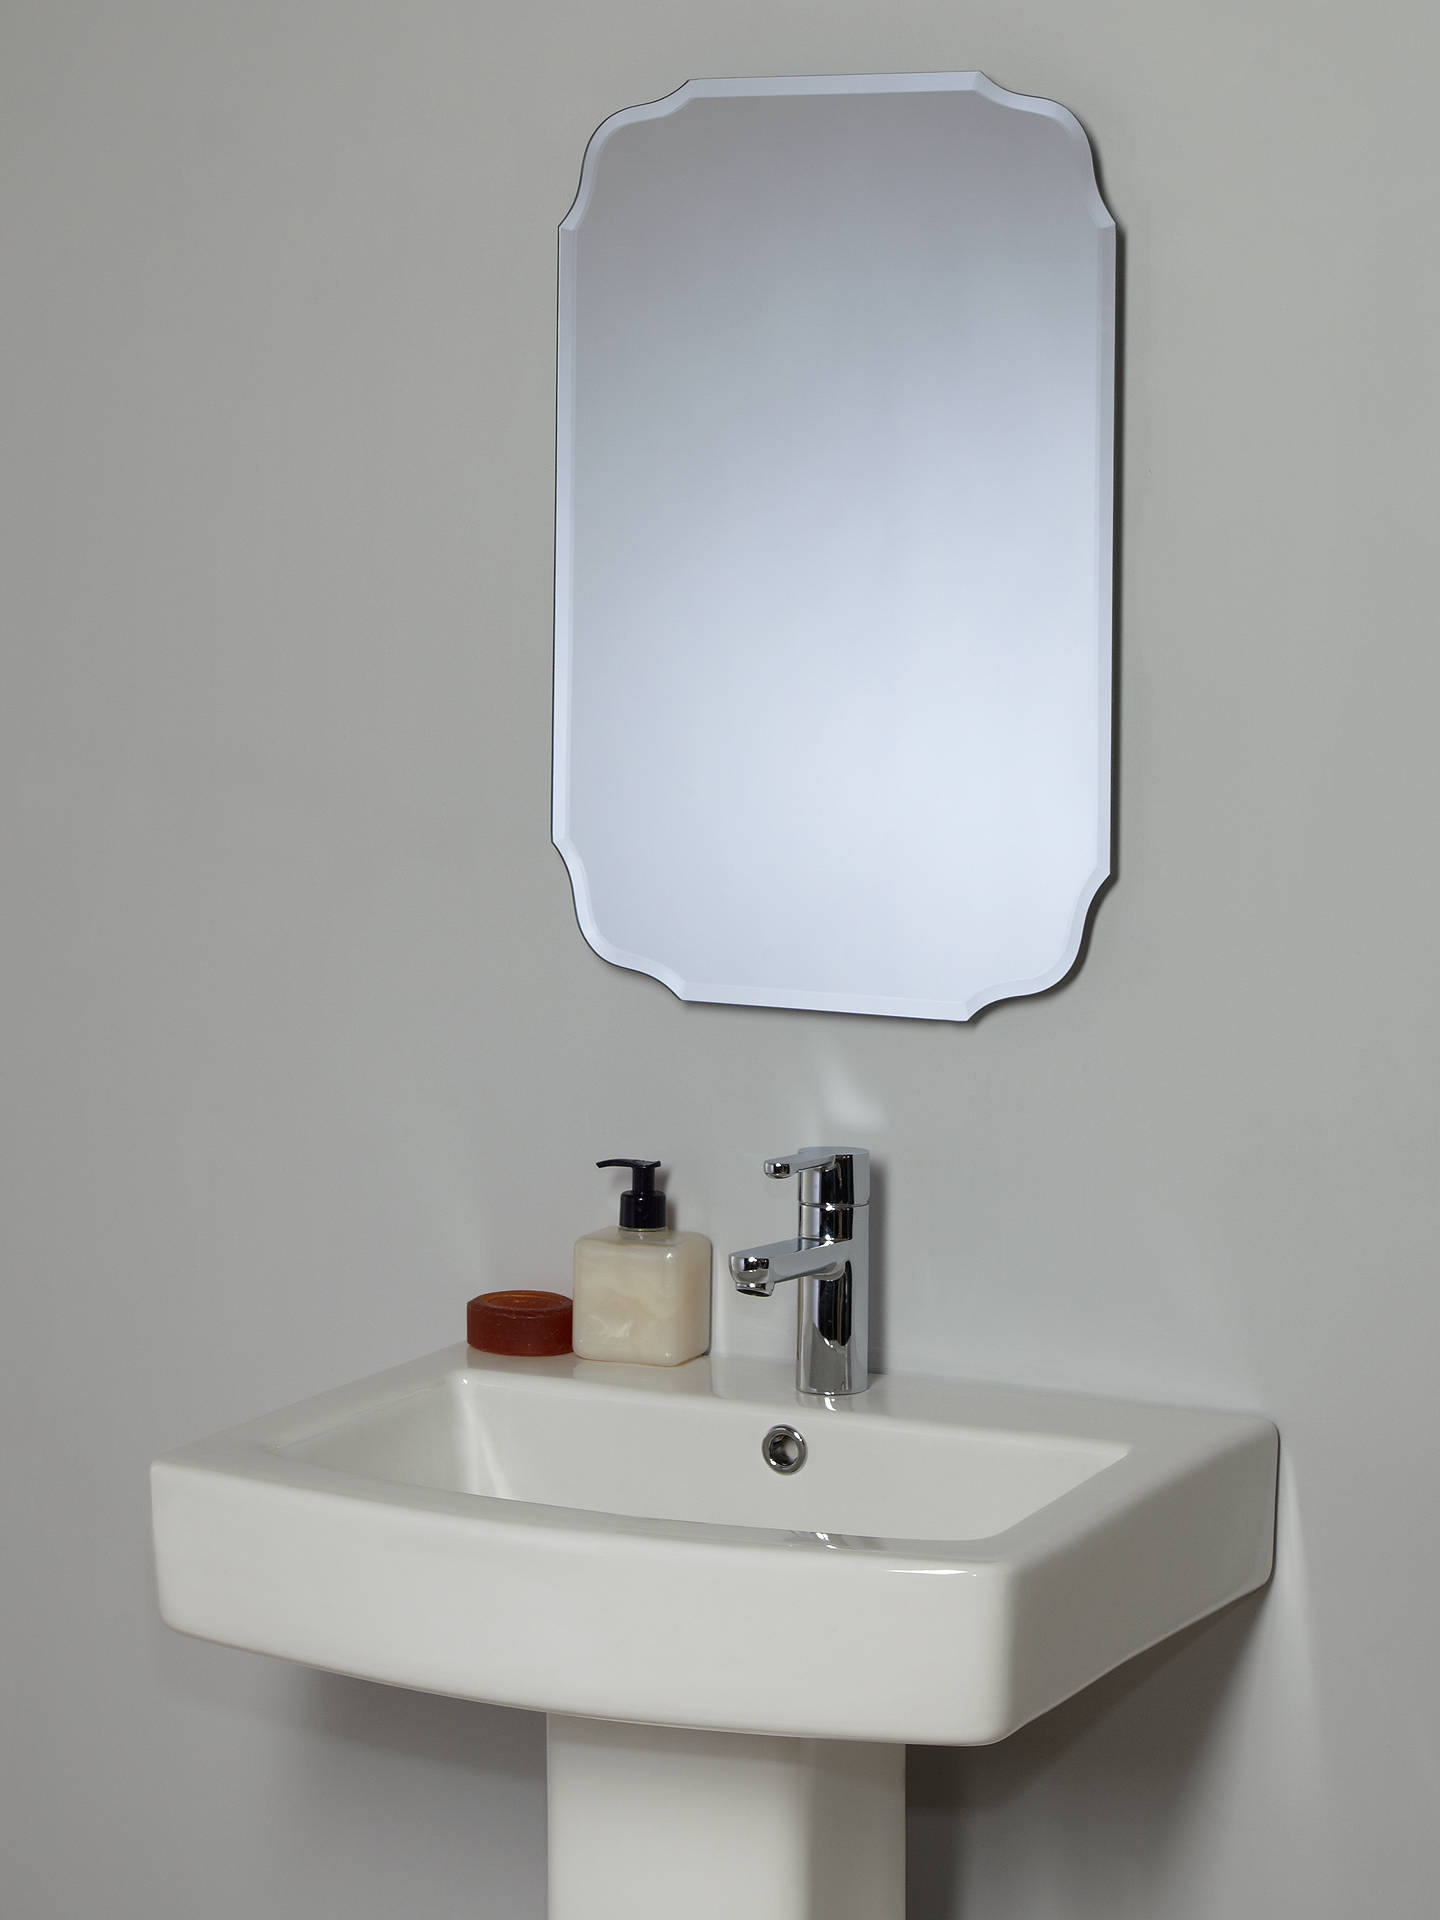 Bathroom Mirrors Online
 John Lewis & Partners Vintage Bathroom Wall Mirror at John